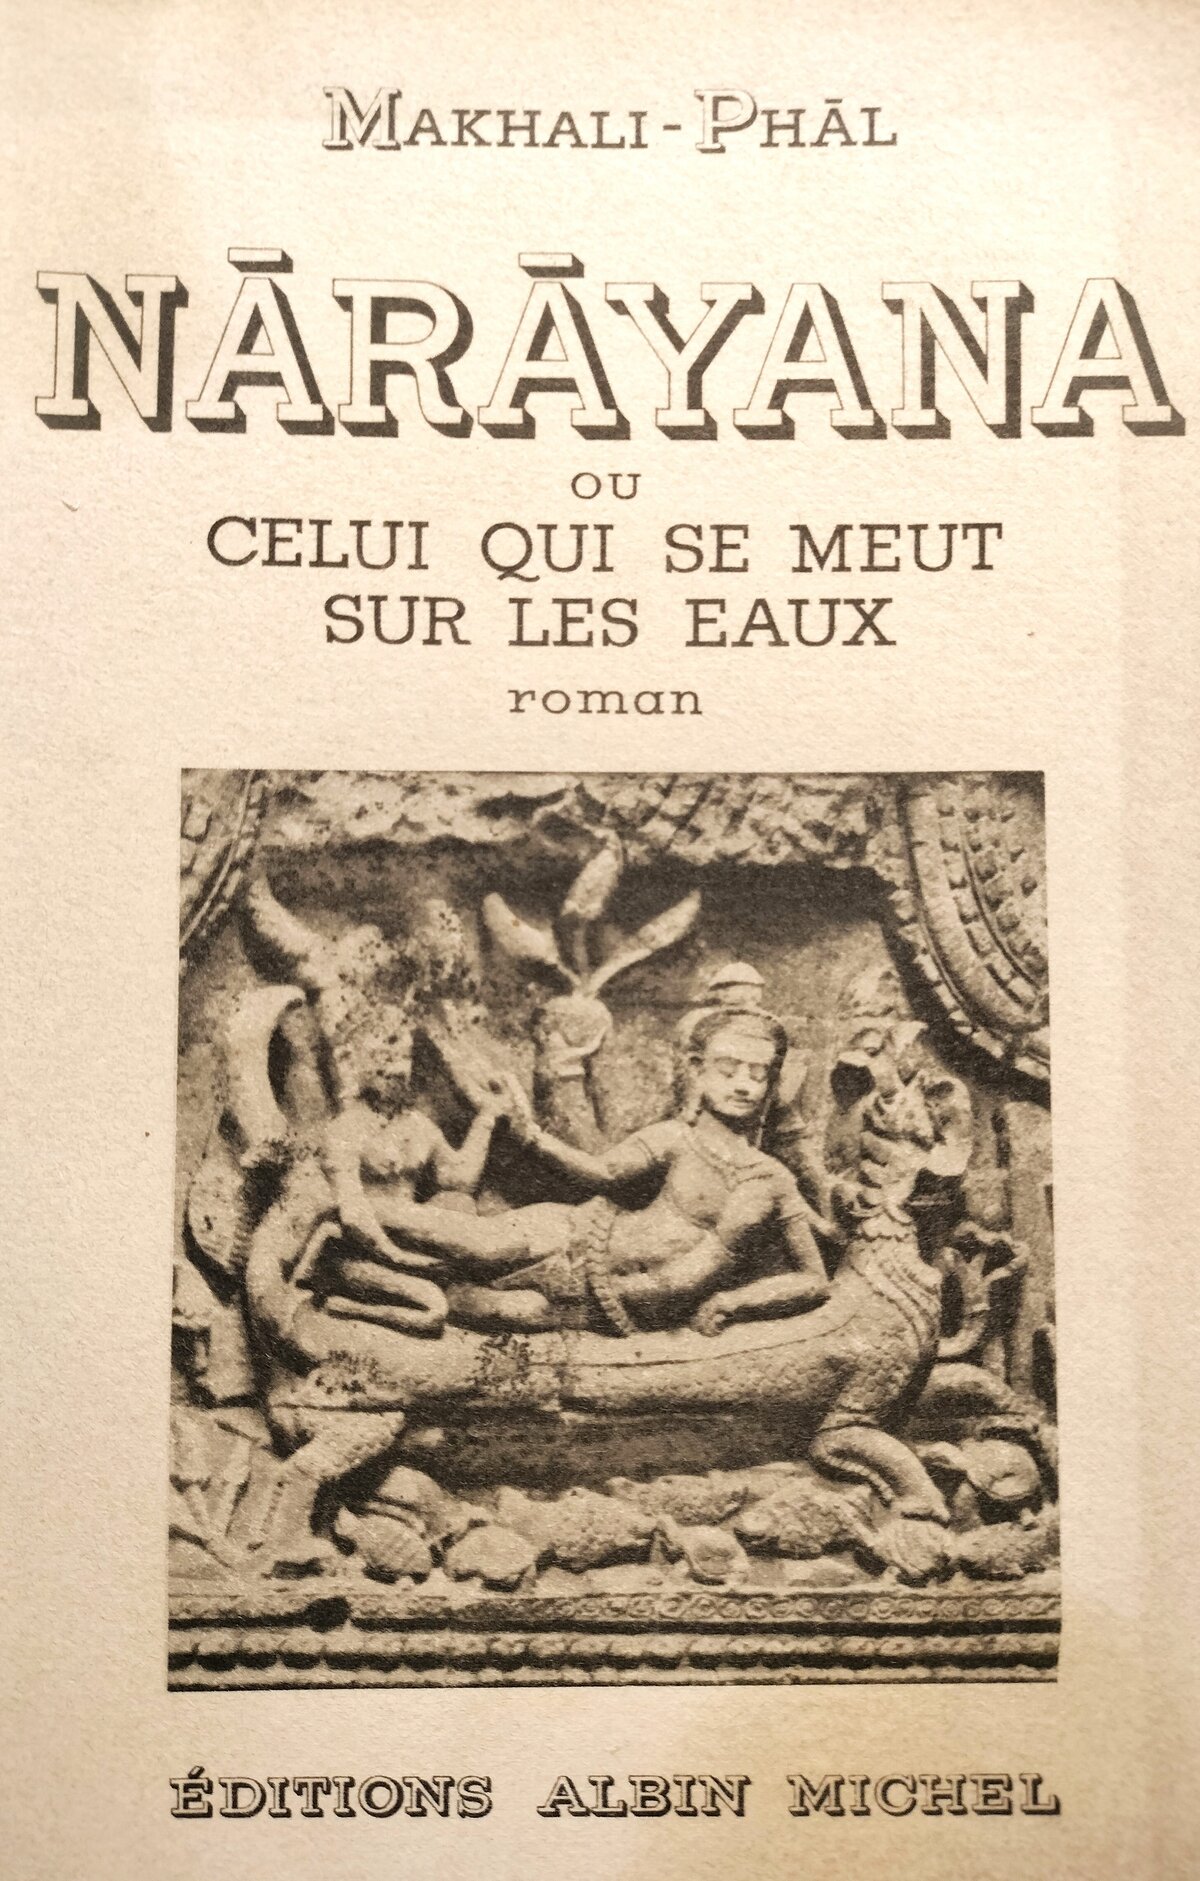 Makhali&#x20;Phal&#x20;Narayana&#x20;Cover